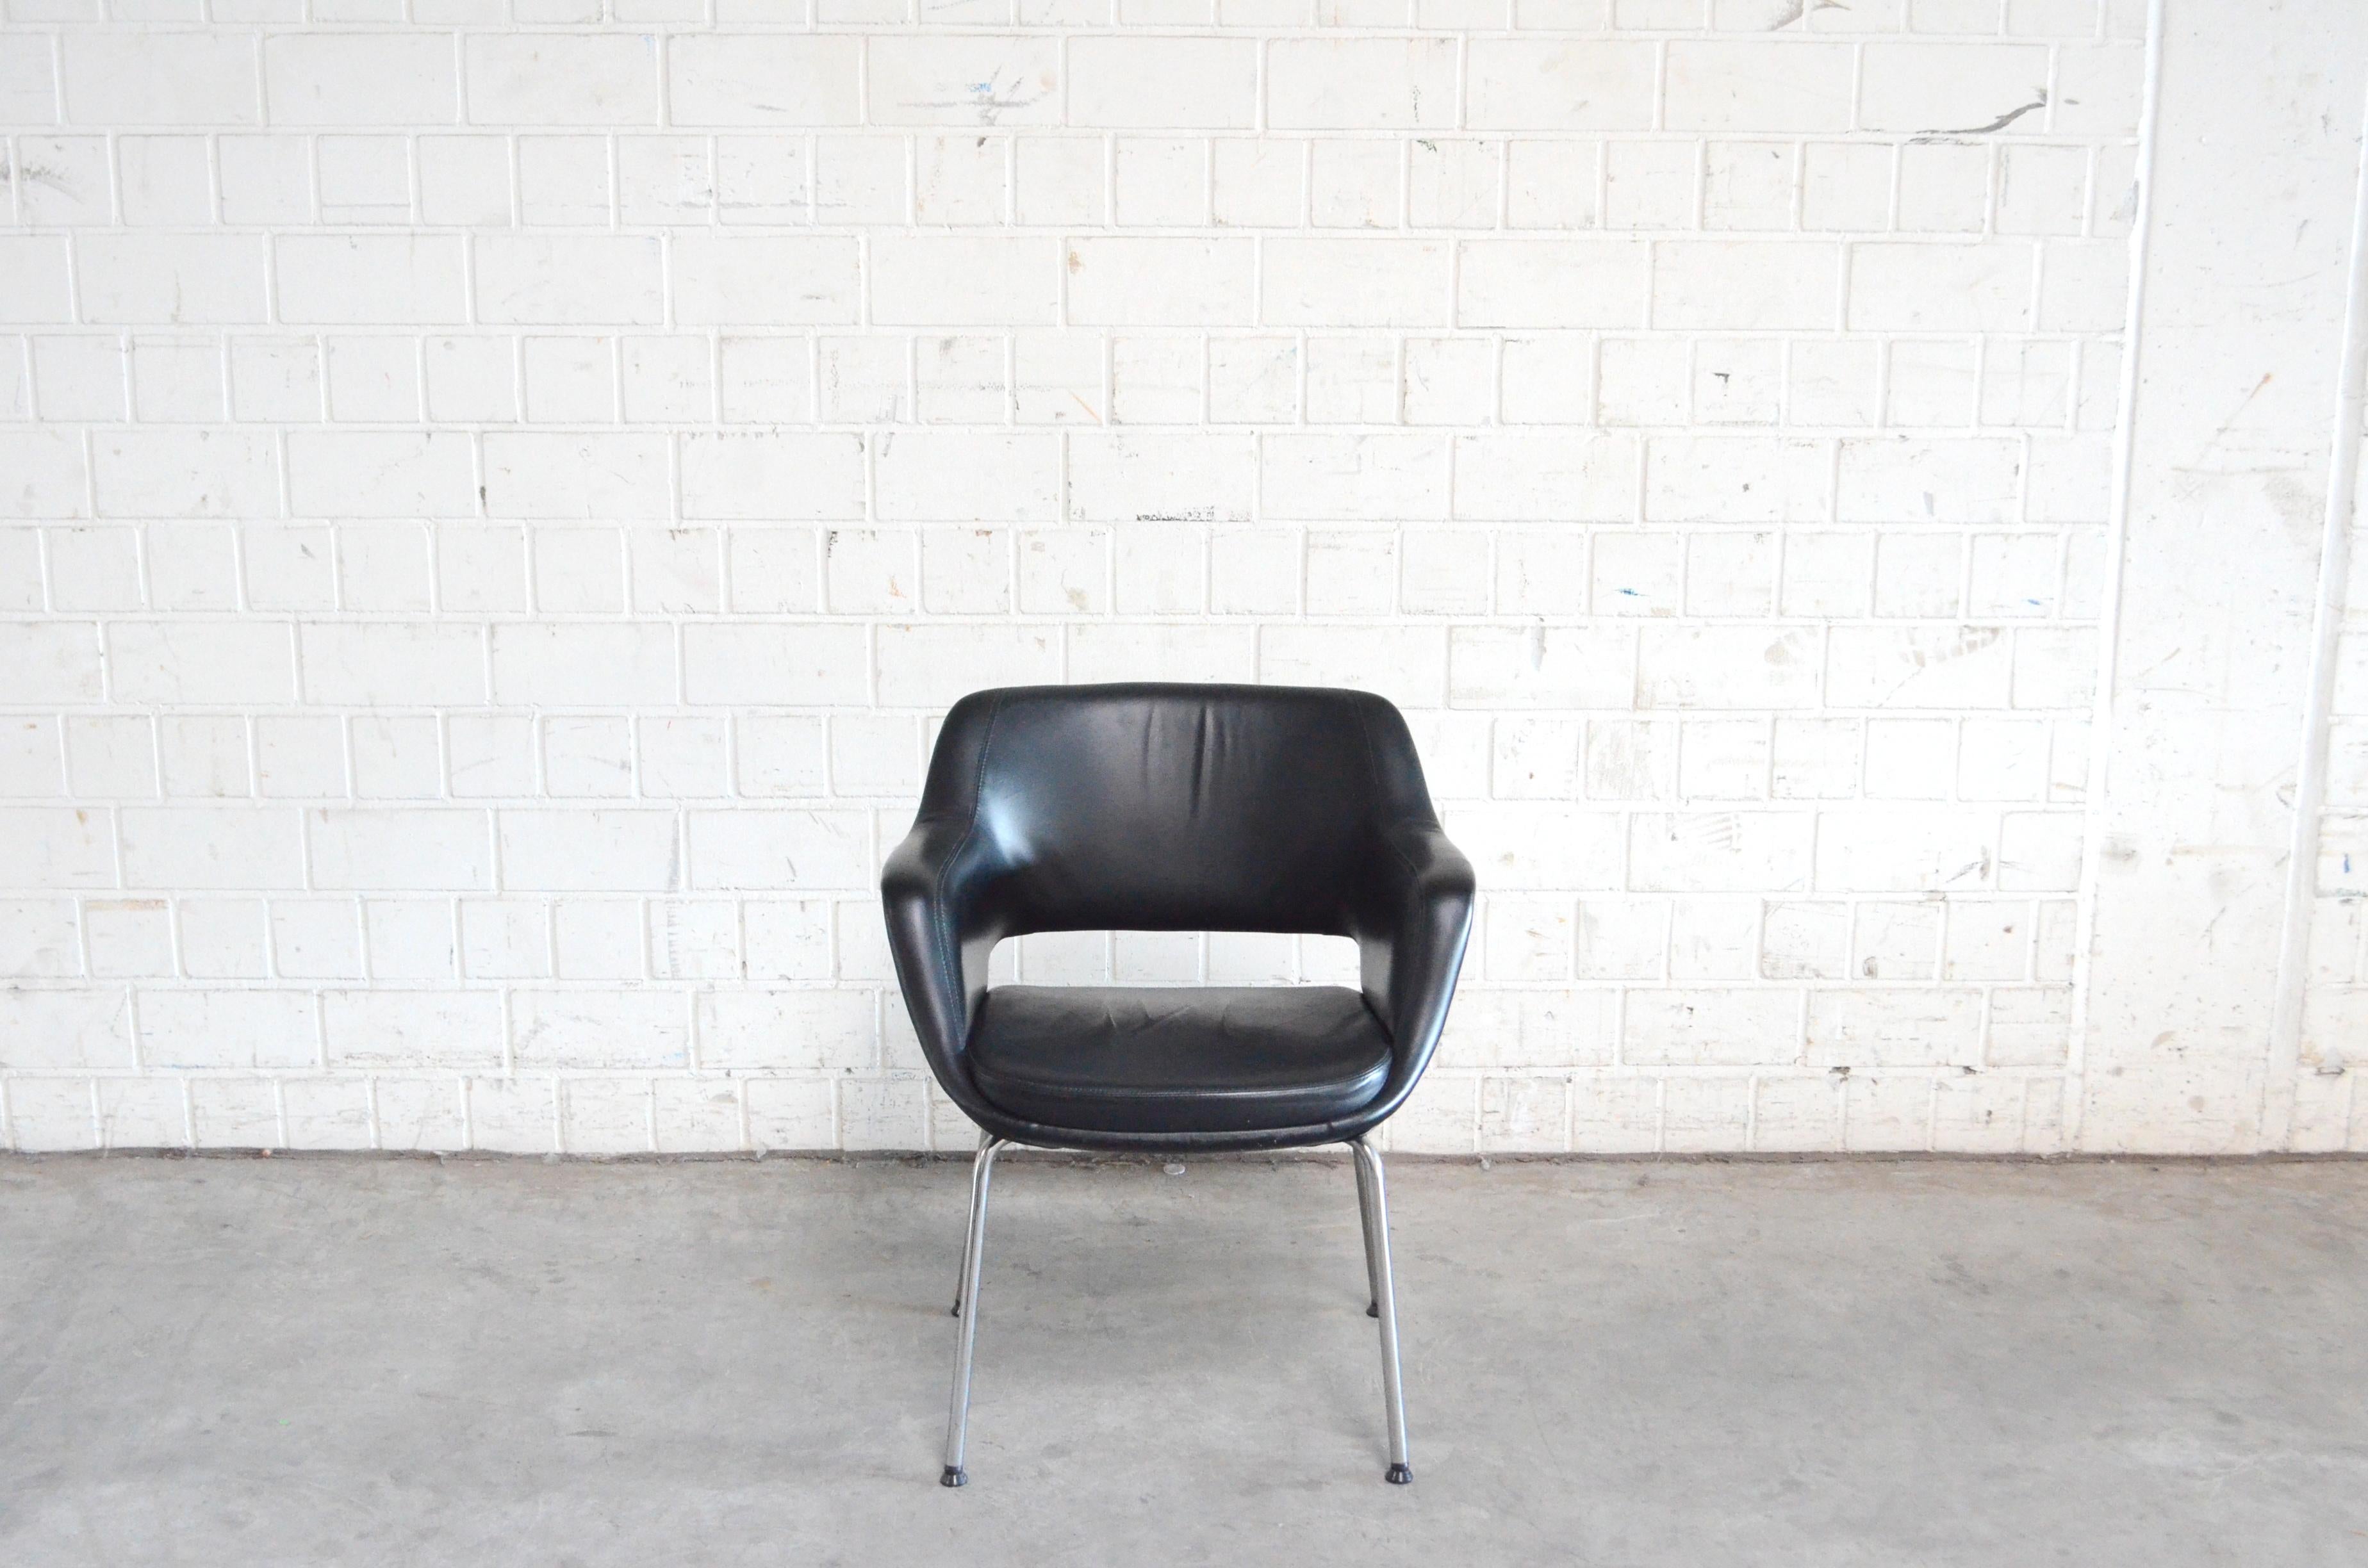 Olli Mannermaa Pair of Leather Kilta Chair by Eugen Schmidt & Cassina Martela For Sale 5